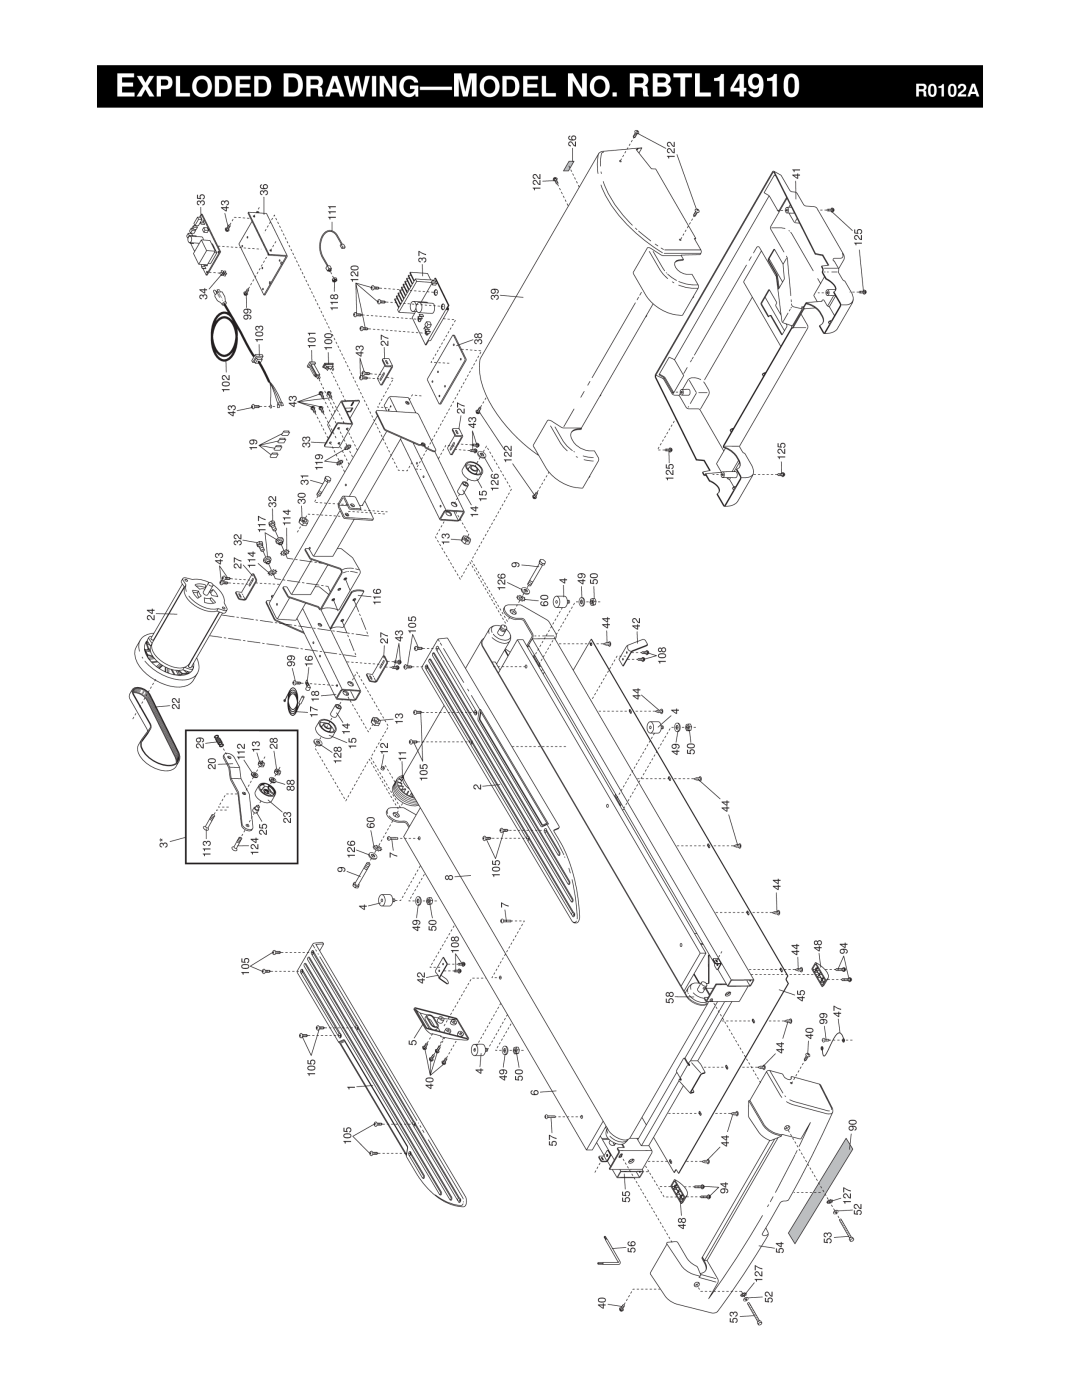 Reebok Fitness manual Exploded, NO. RBTL14910, Drawing-Model, R0102A 